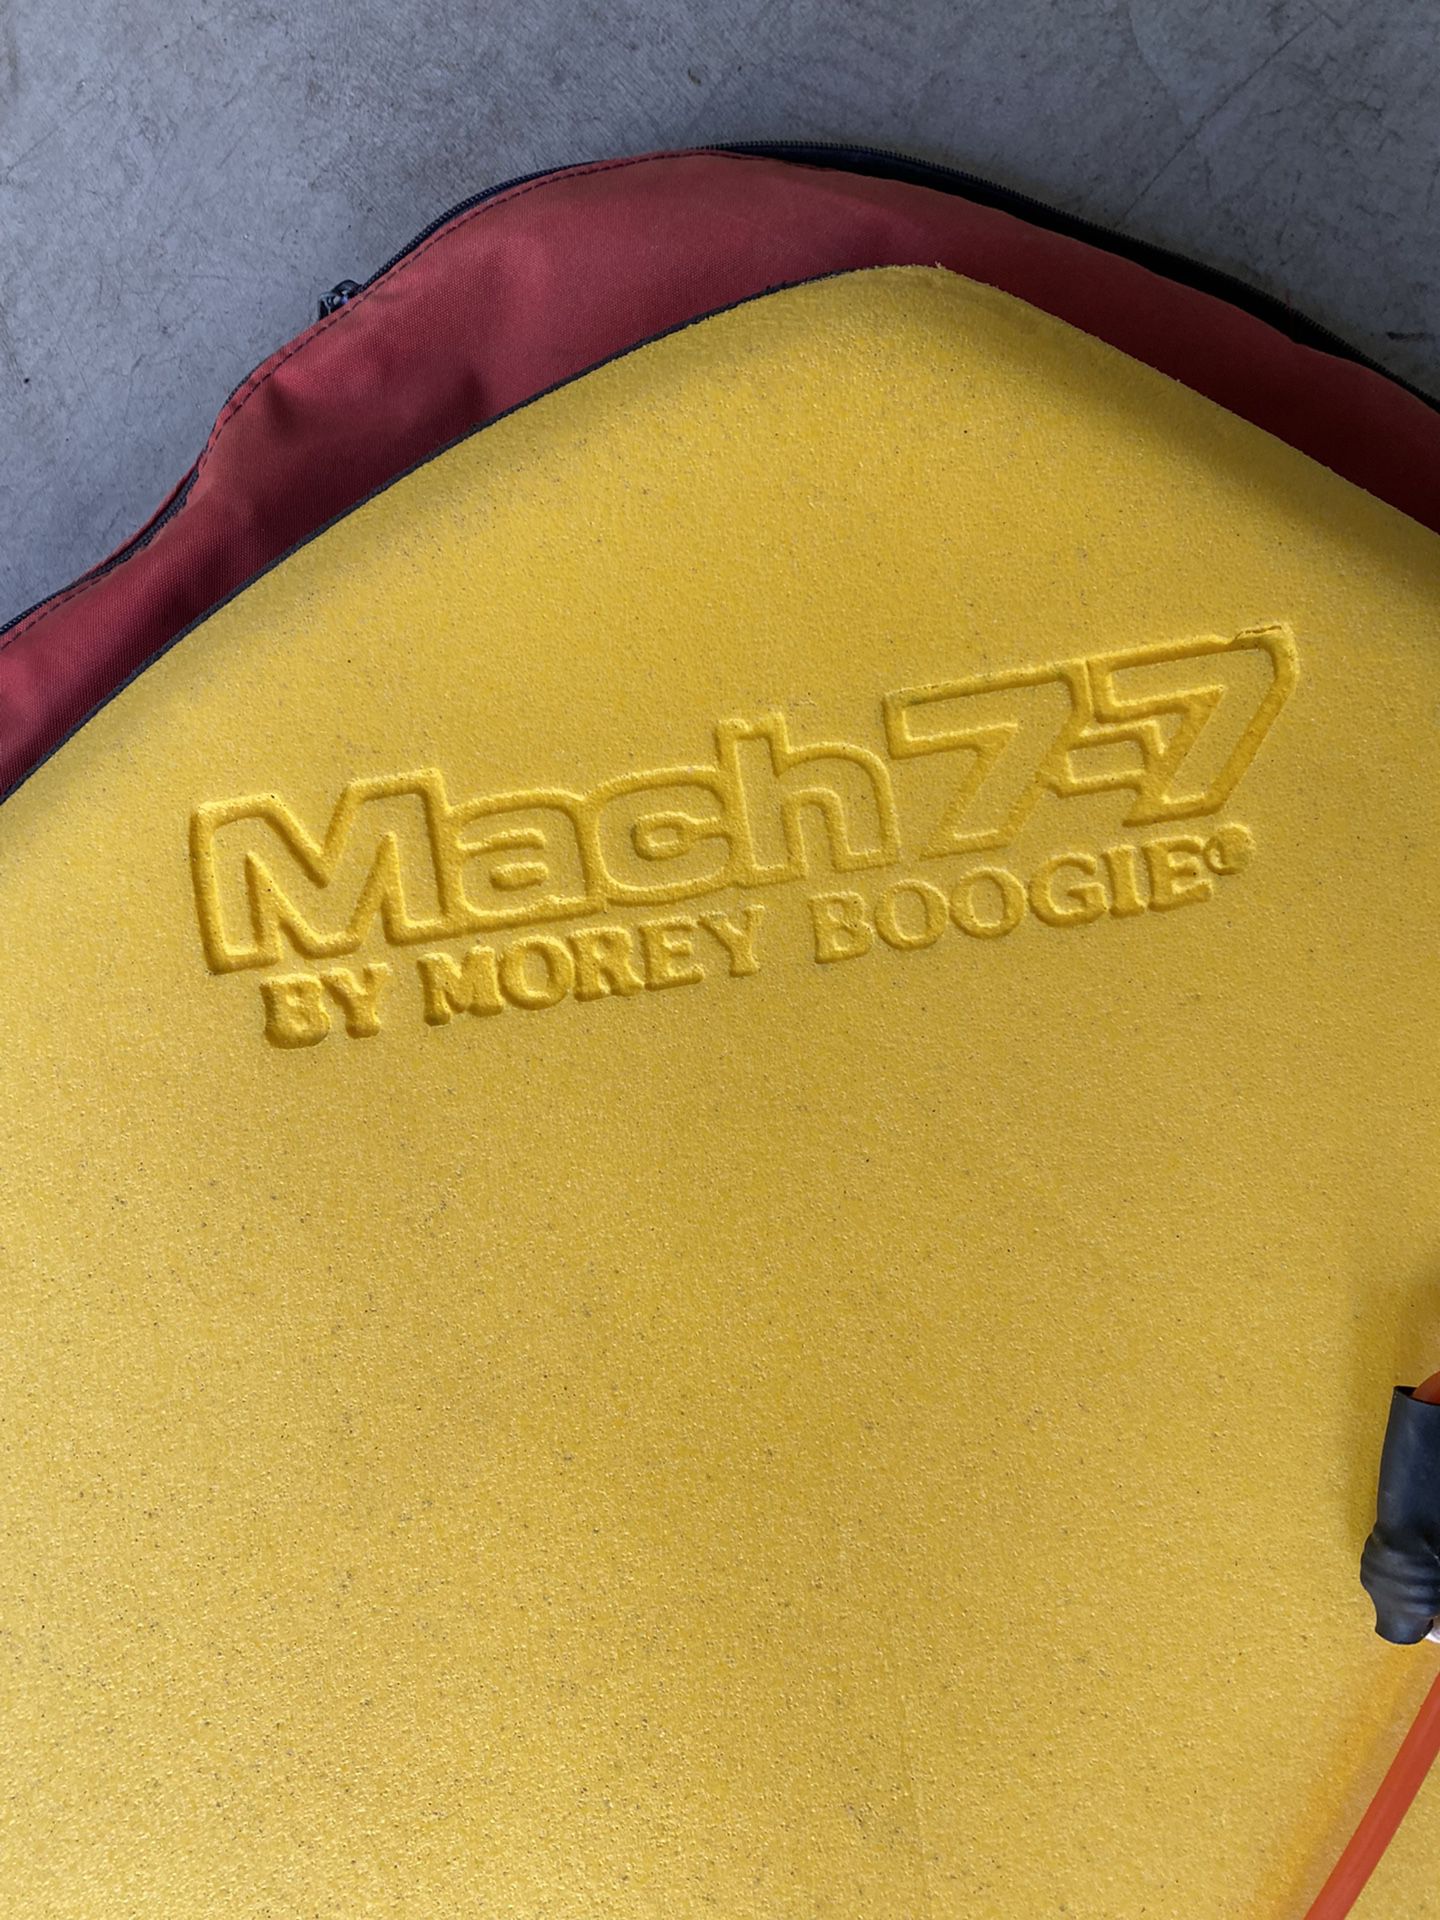 Supreme Morey Mach 7 Bodyboard - Red – Fan Cave